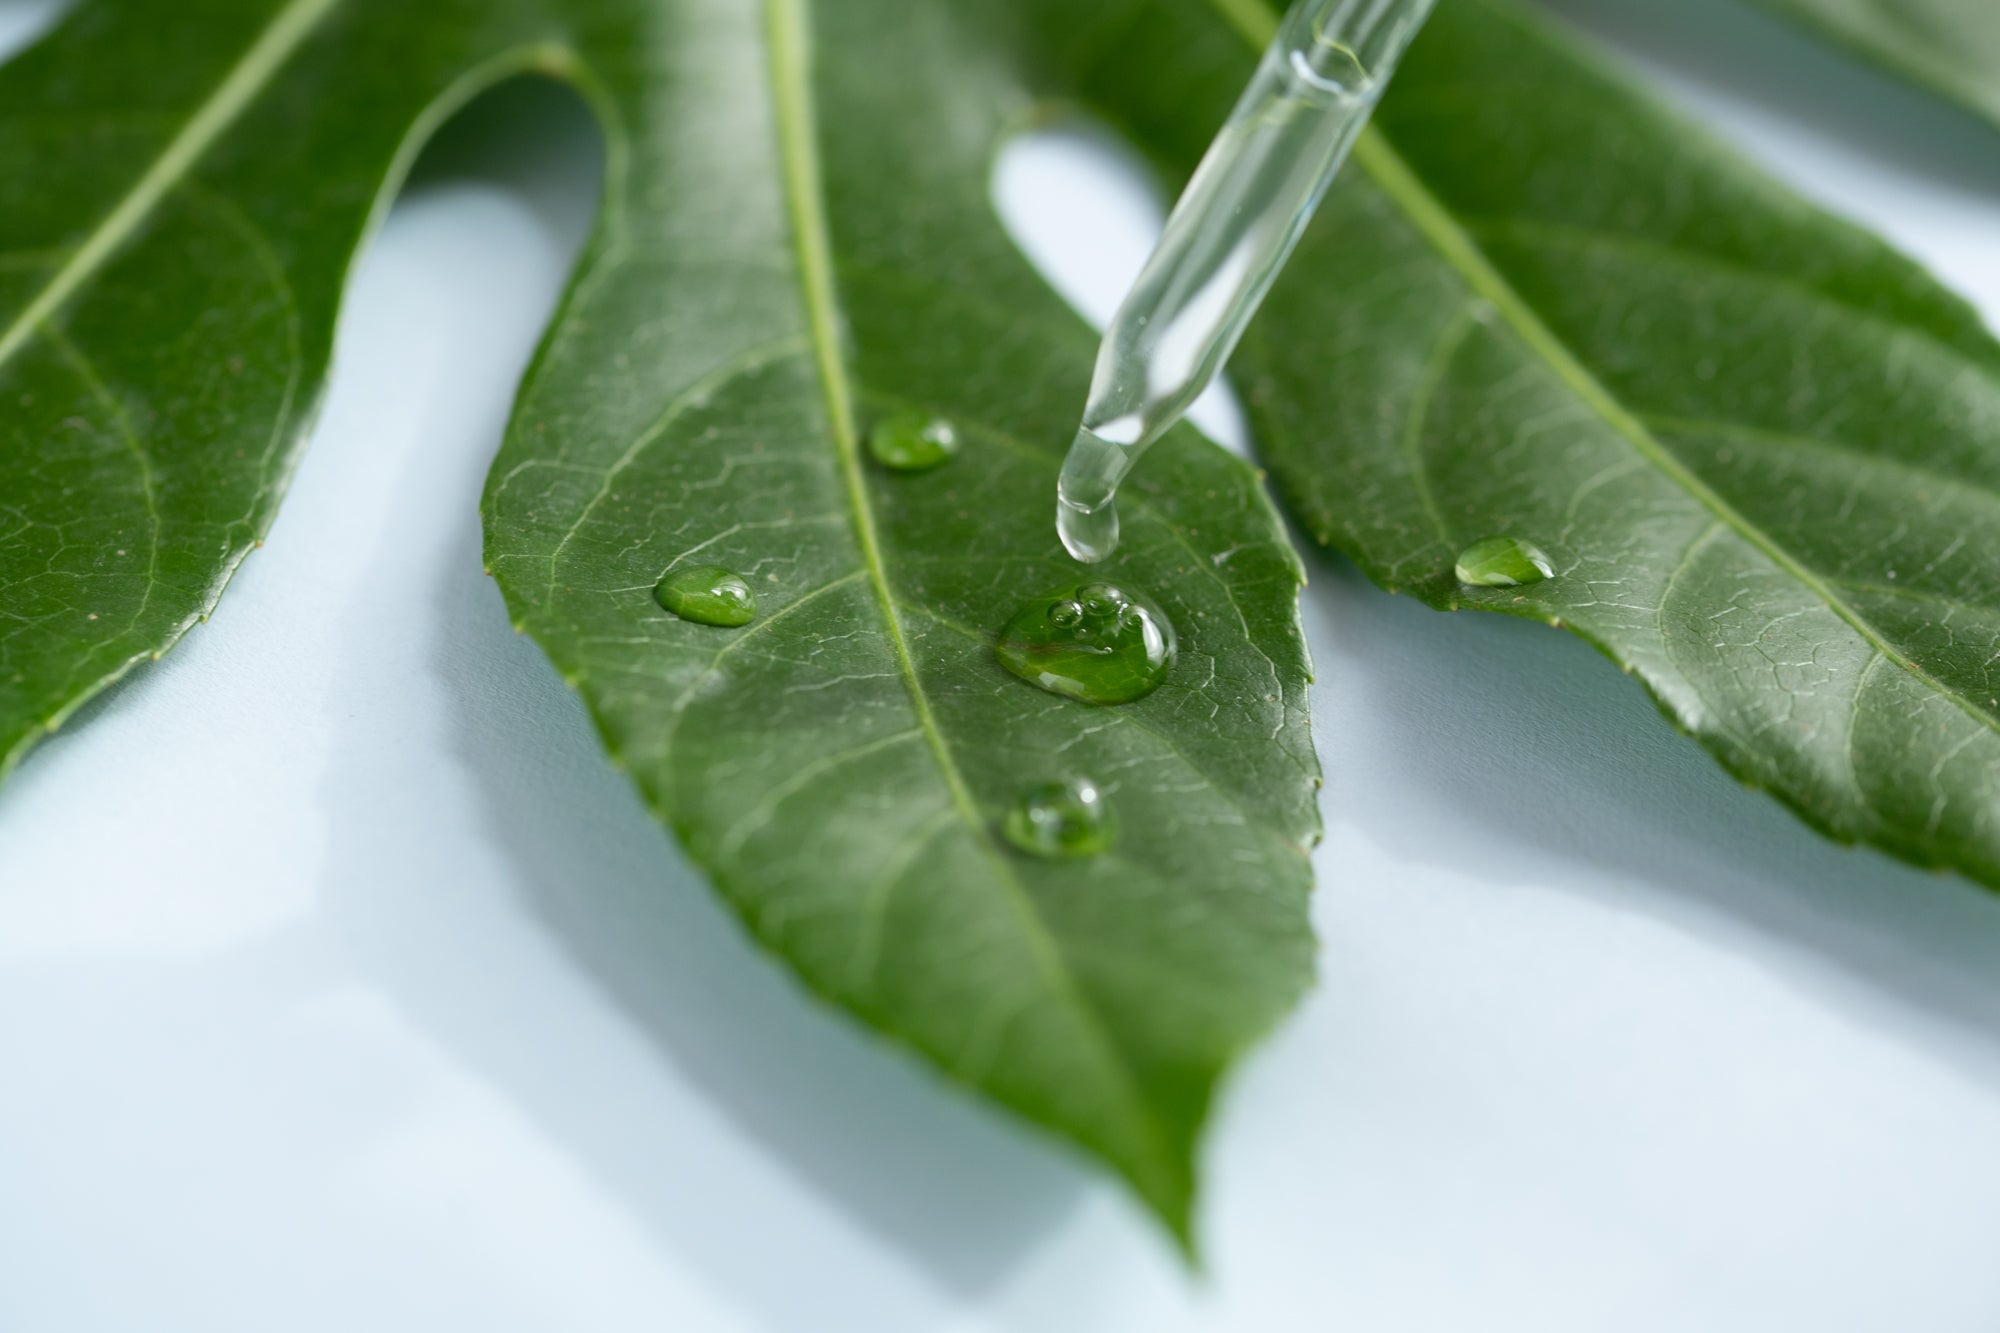 Drops of skincare facial serum ontop of a large natural leaf